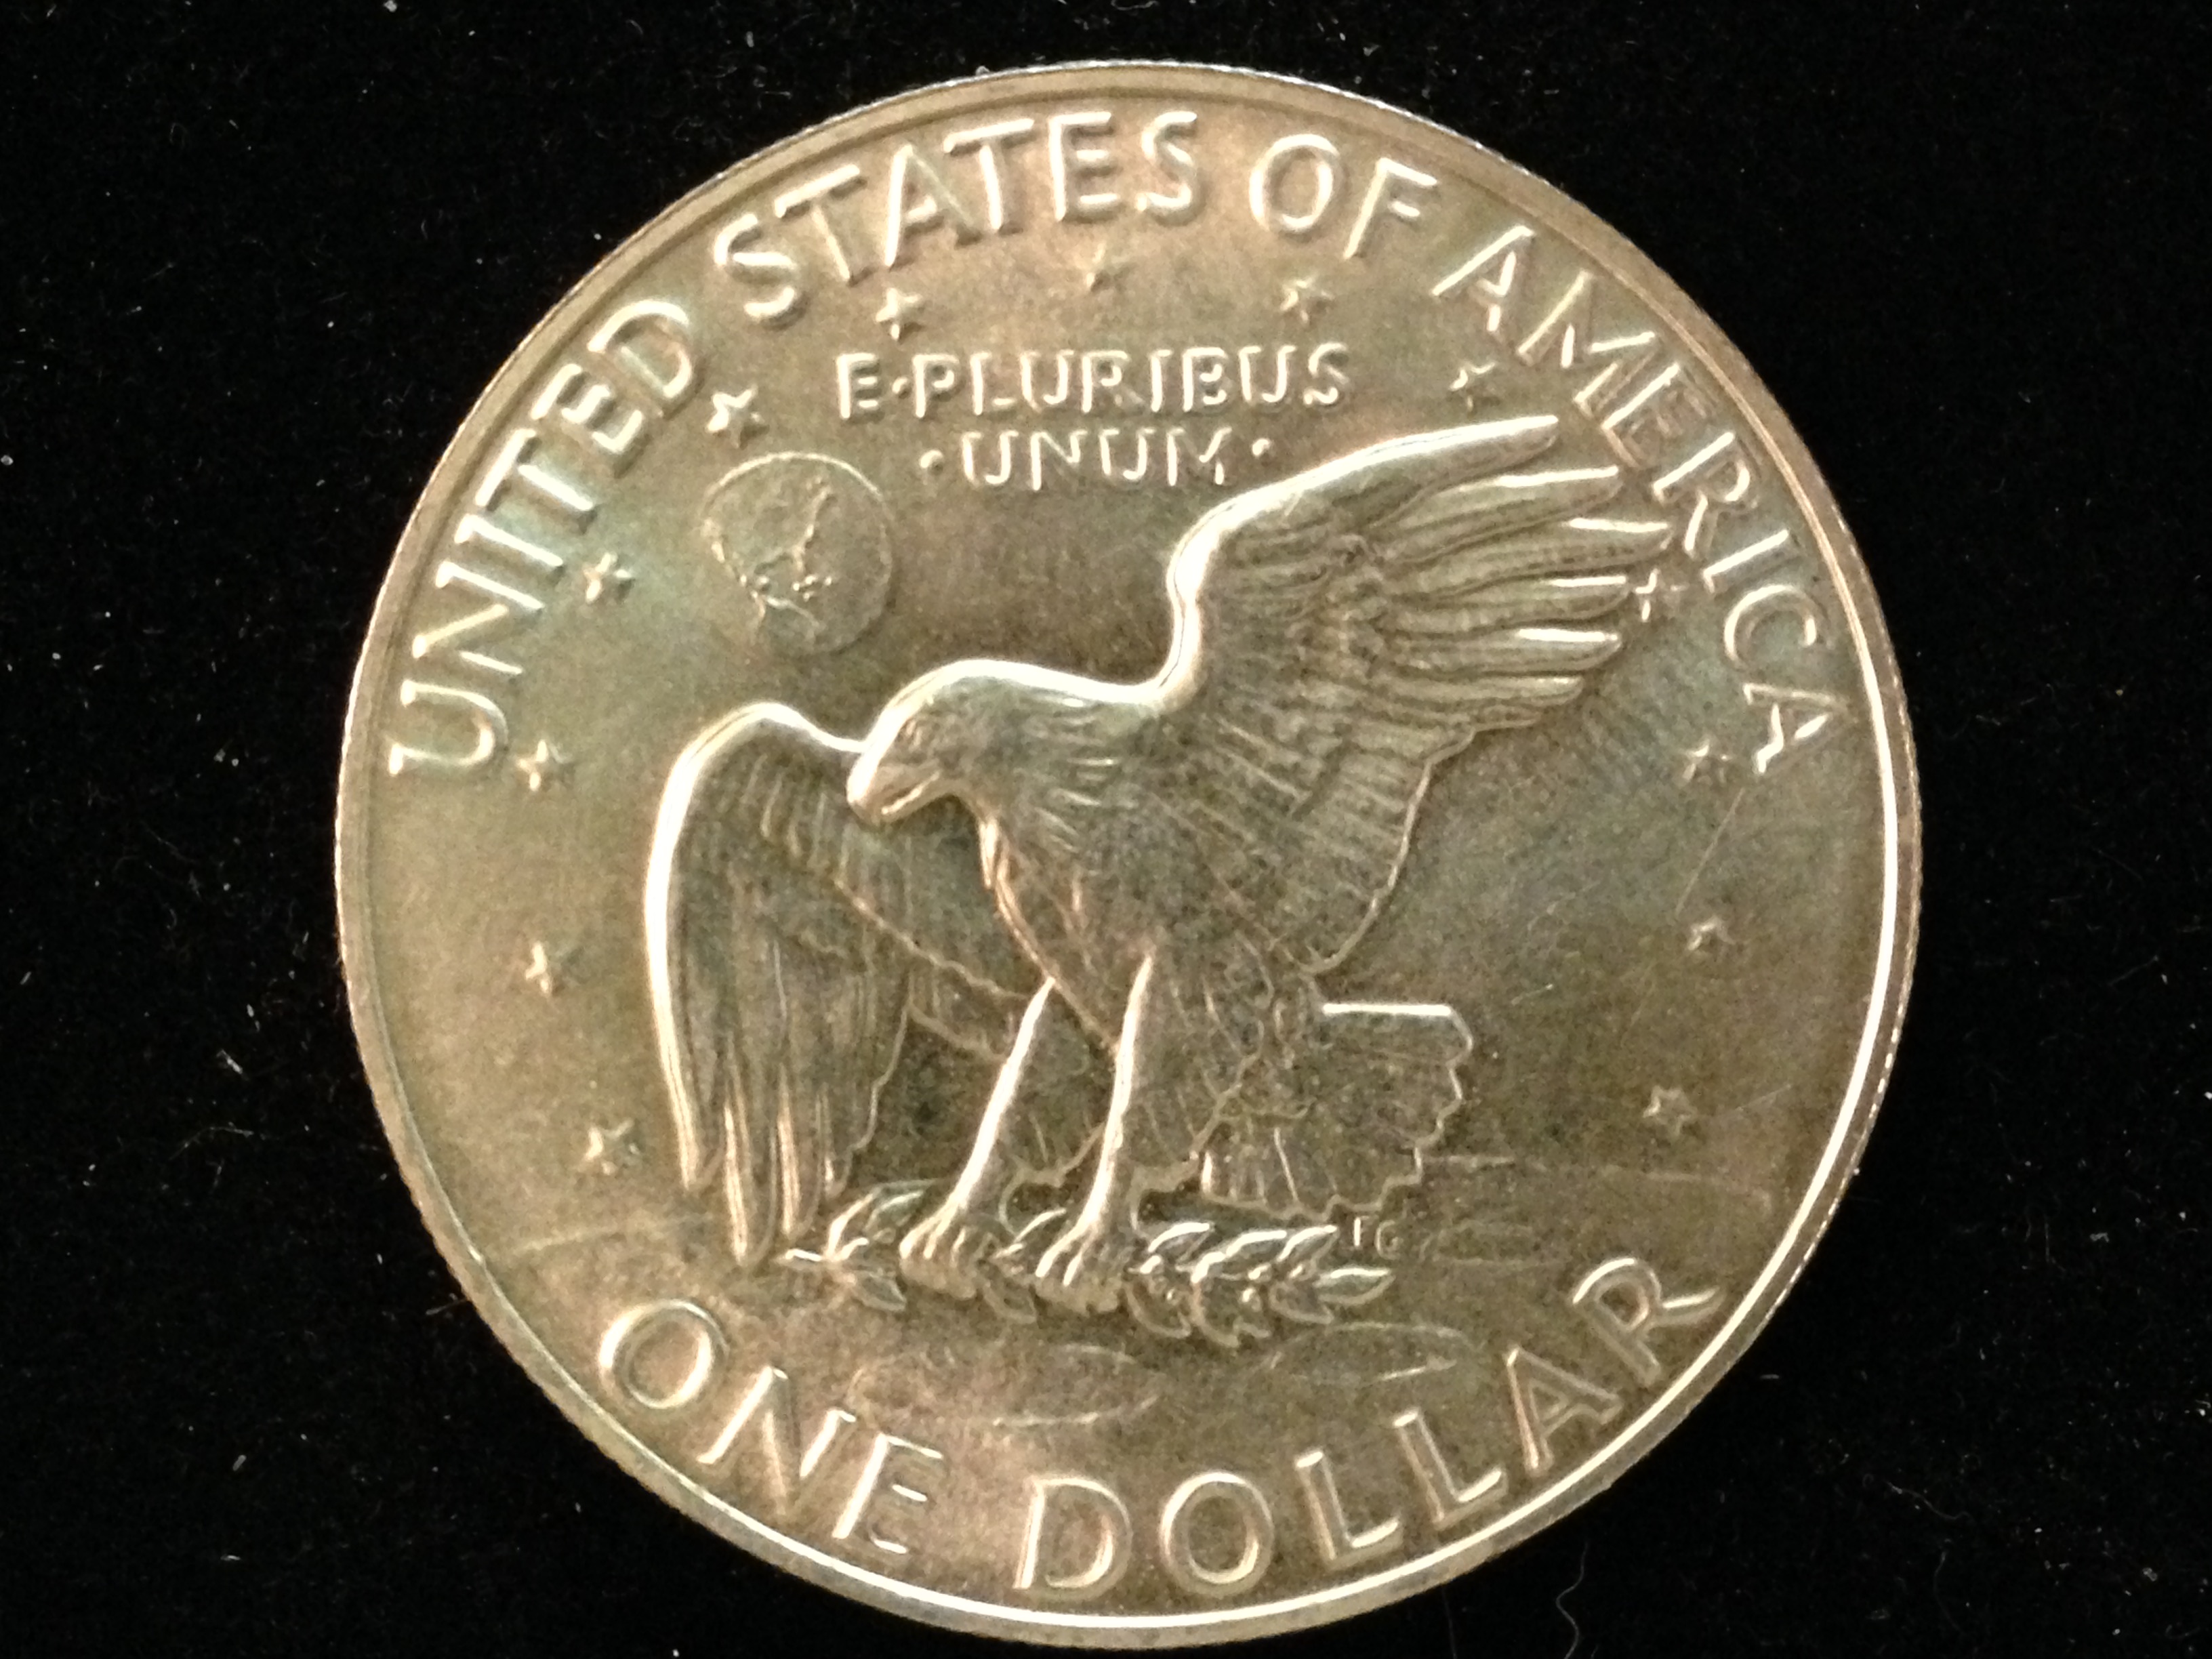 1972 dwight d eisenhower silver dollar value